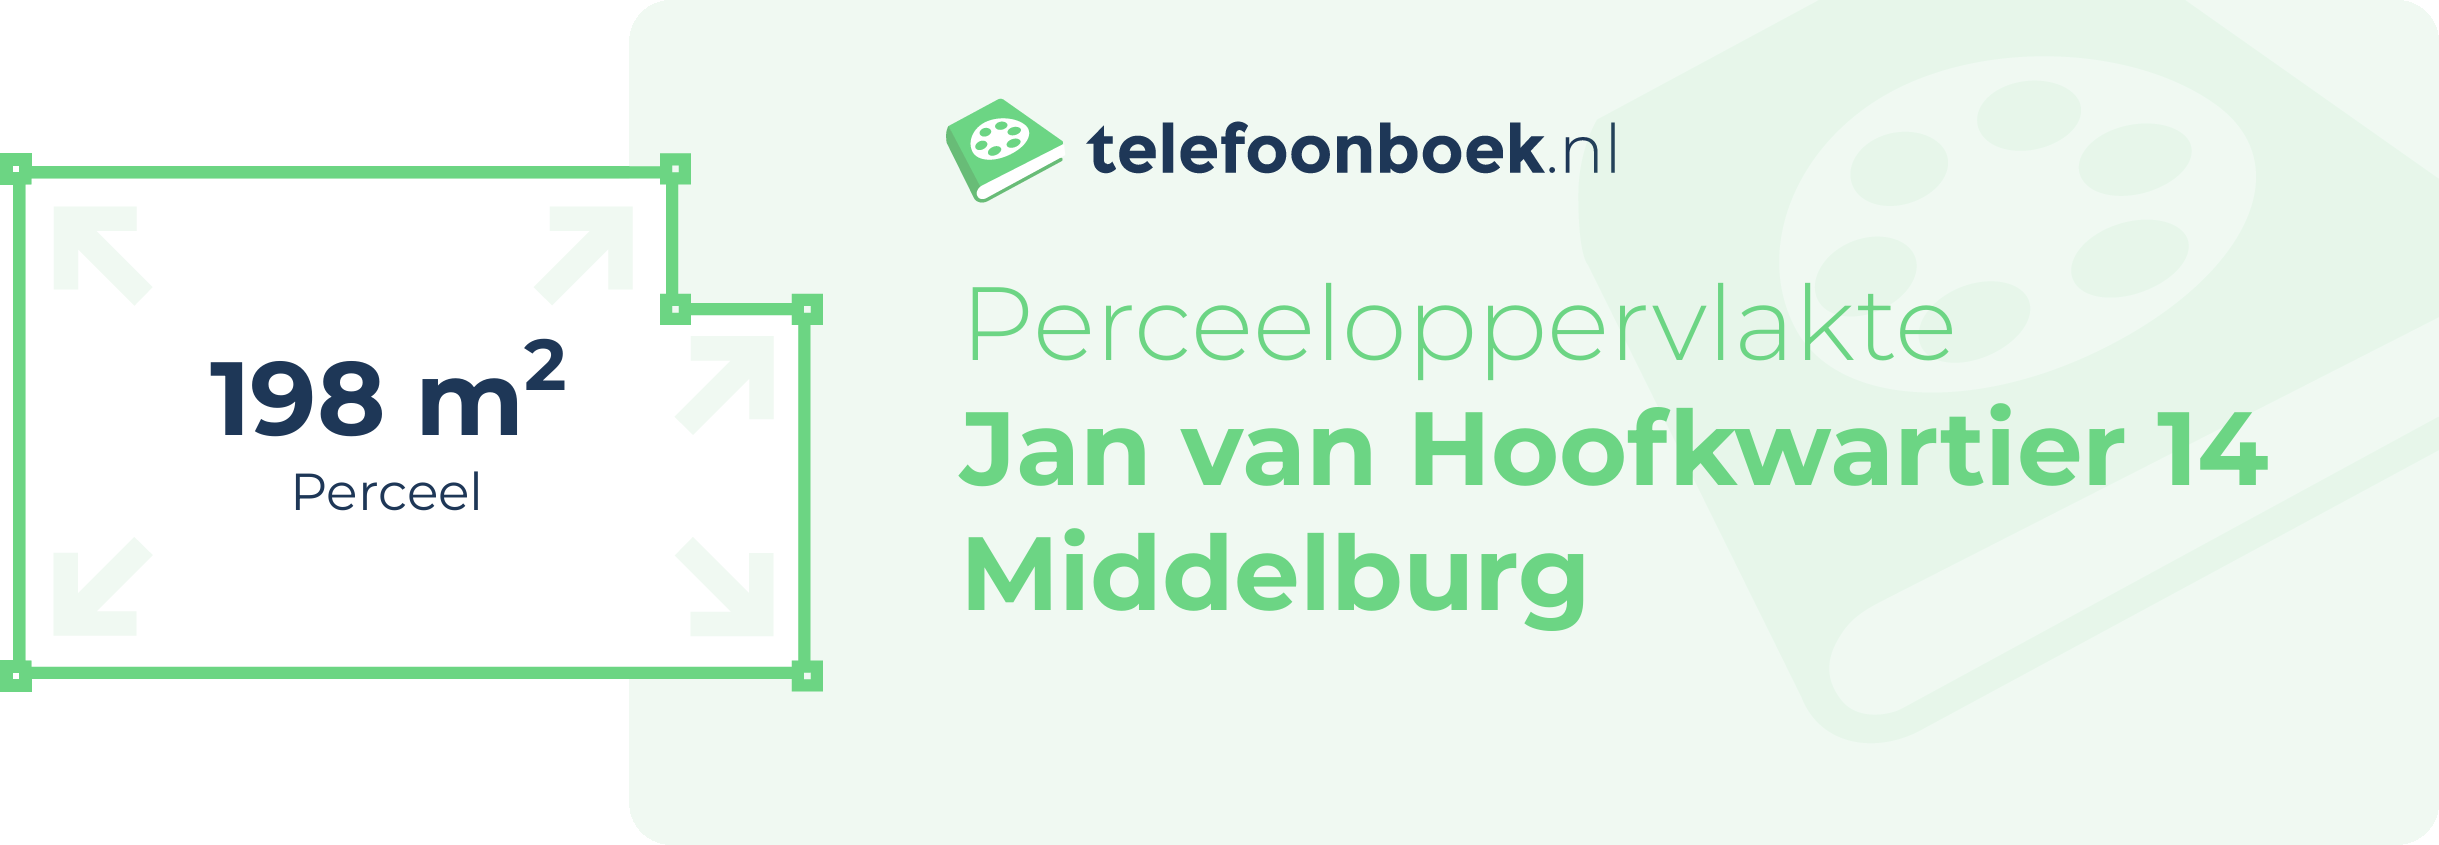 Perceeloppervlakte Jan Van Hoofkwartier 14 Middelburg